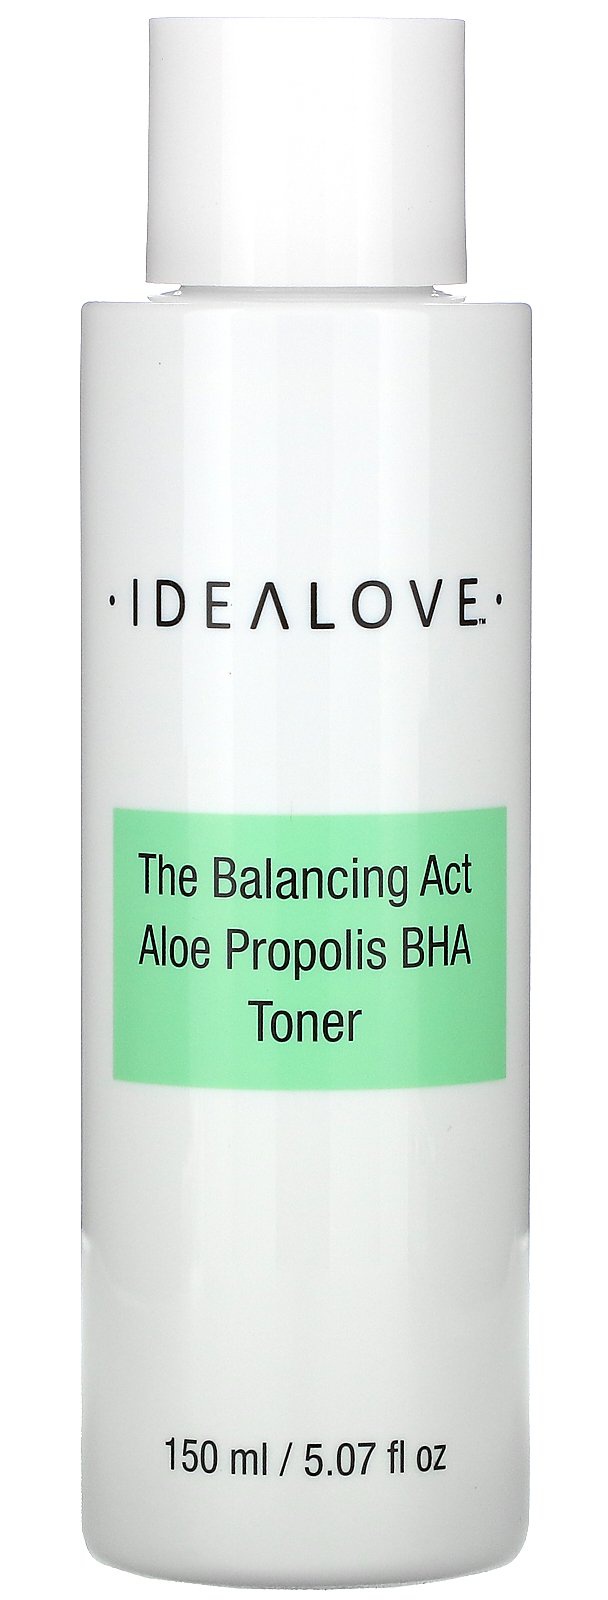 Idealove The Balancing Act, Aloe Propolis BHA Toner